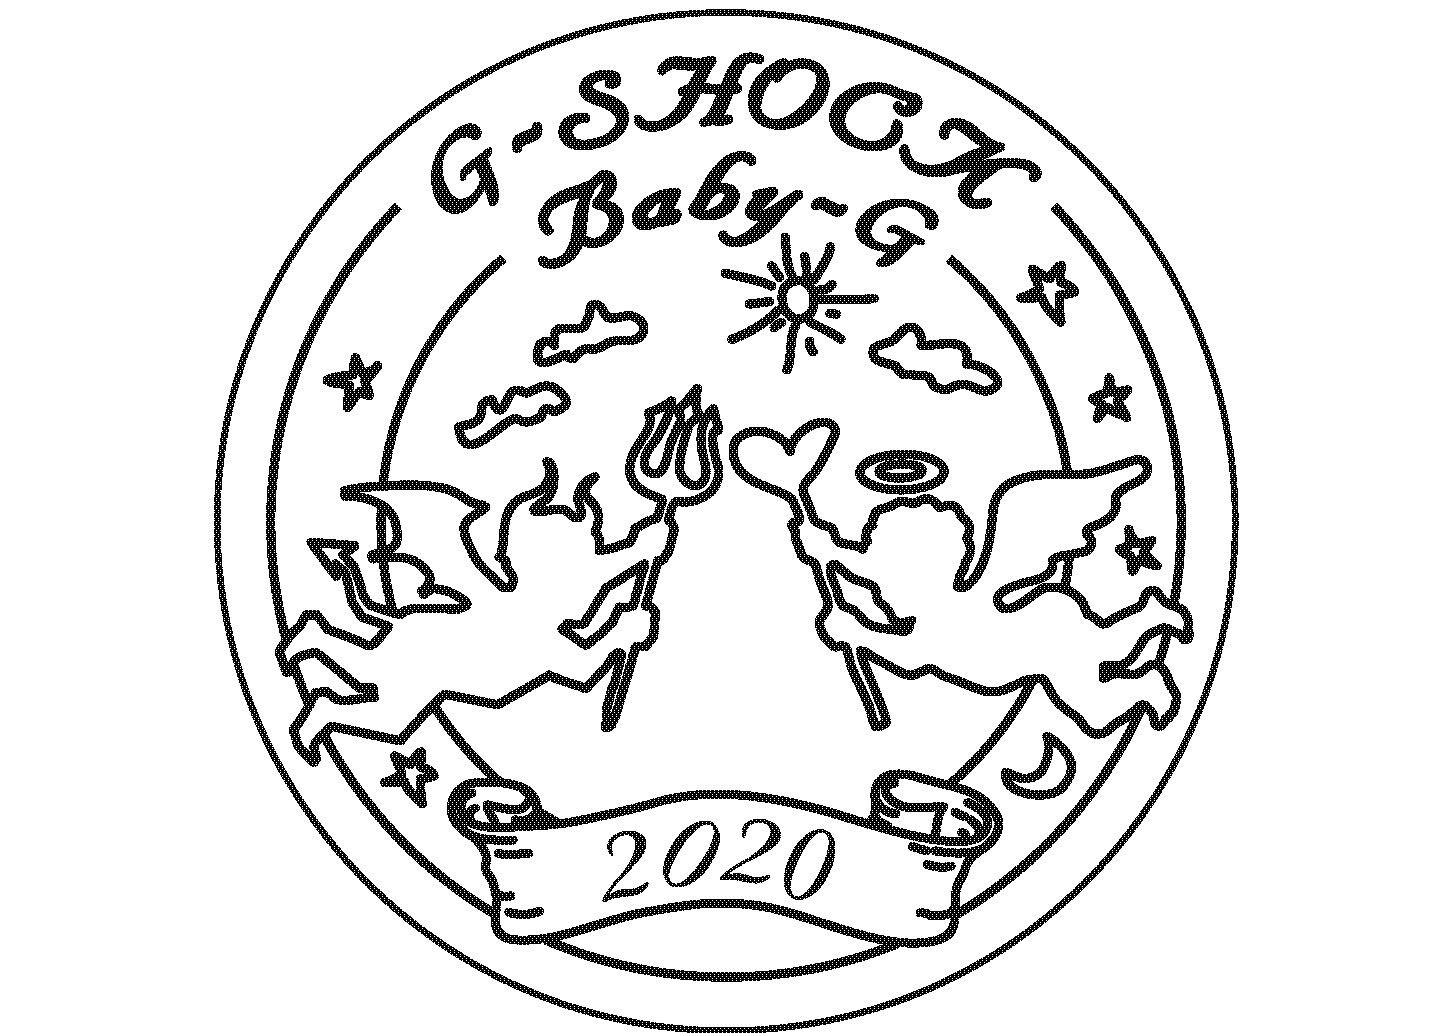 G-SHOCK ラバーズコレクション2020ver.は11月20日発売開始。今年は個性 